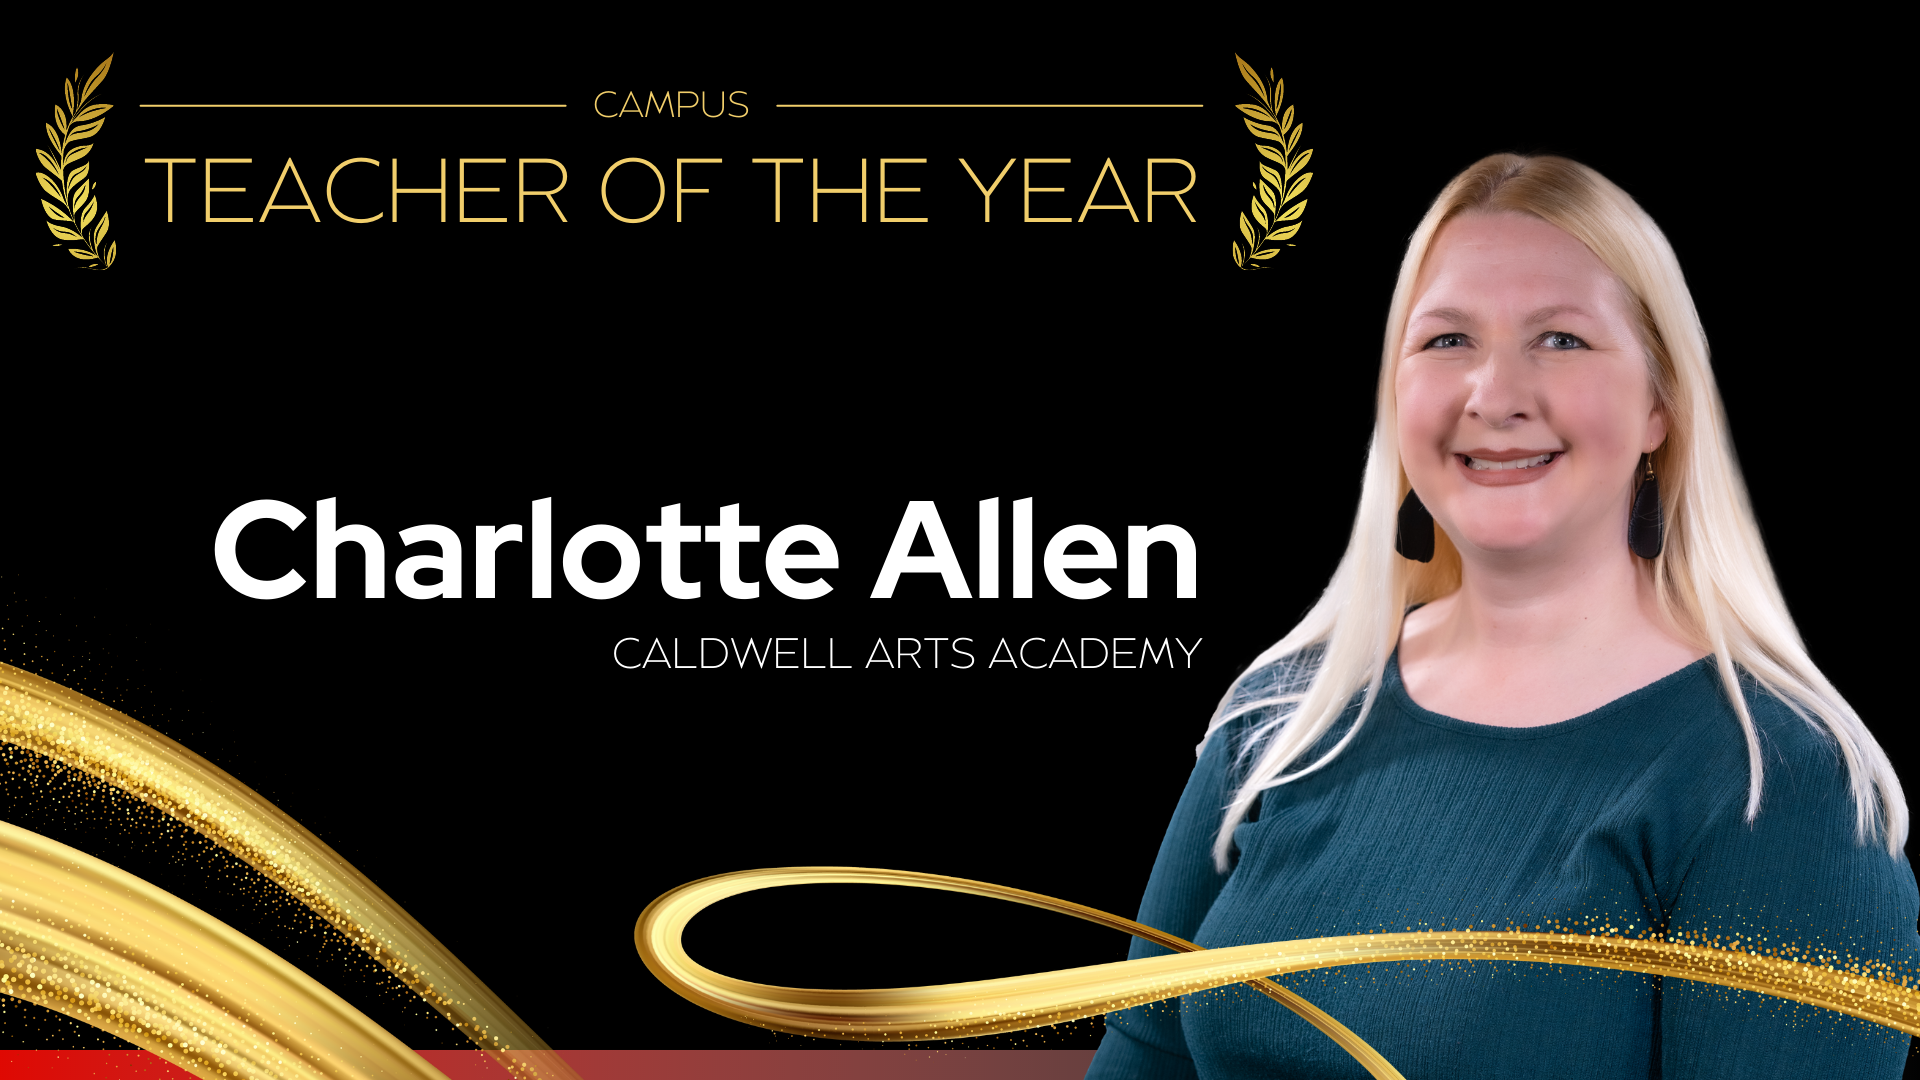 Campus Teacher of the Year Charlotte Allen - Caldwell Arts Academy